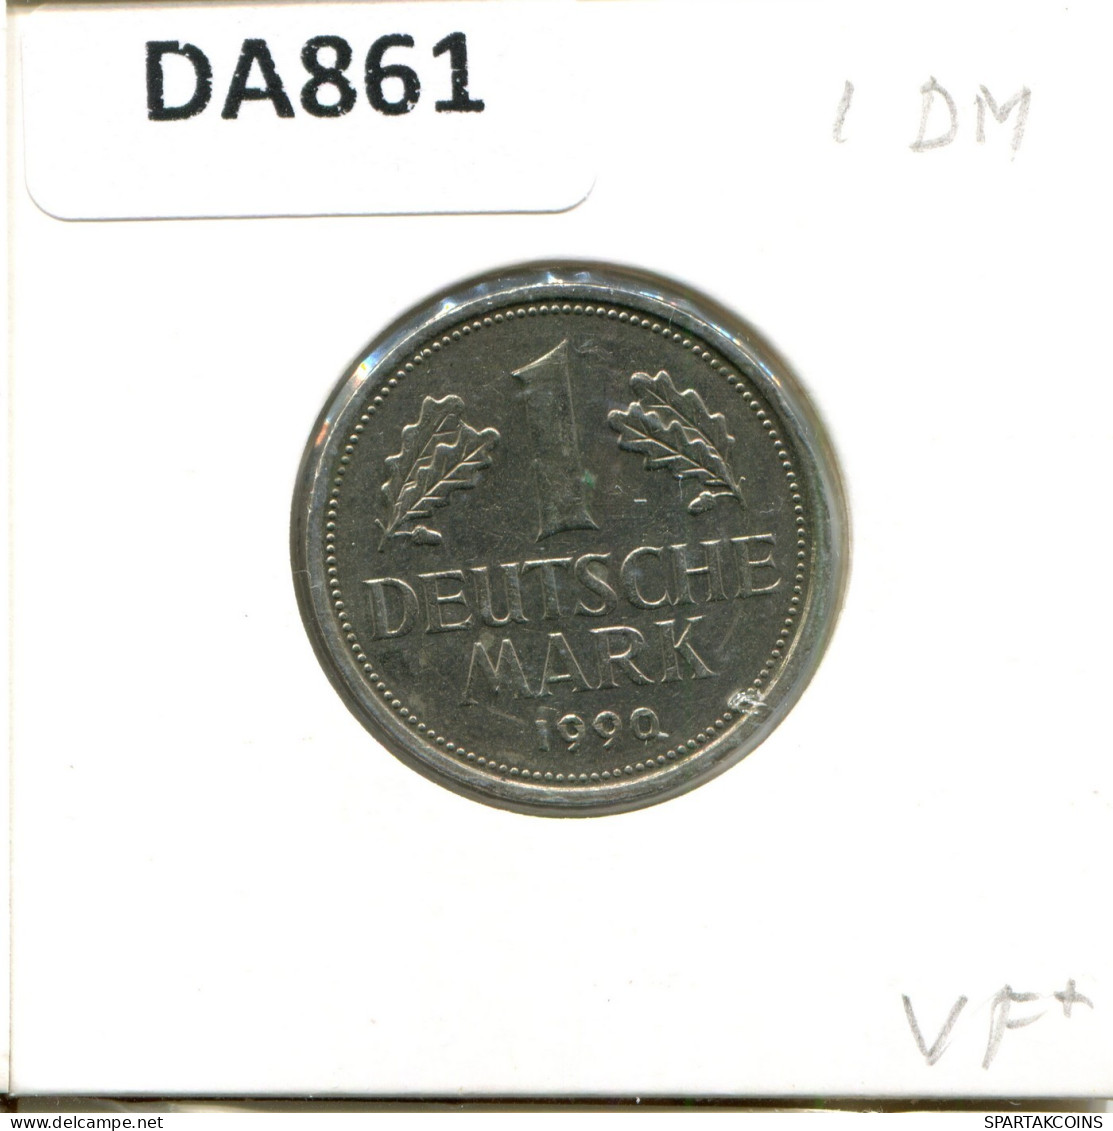 1 DM 1990 F WEST & UNIFIED GERMANY Coin #DA861.U.A - 1 Mark